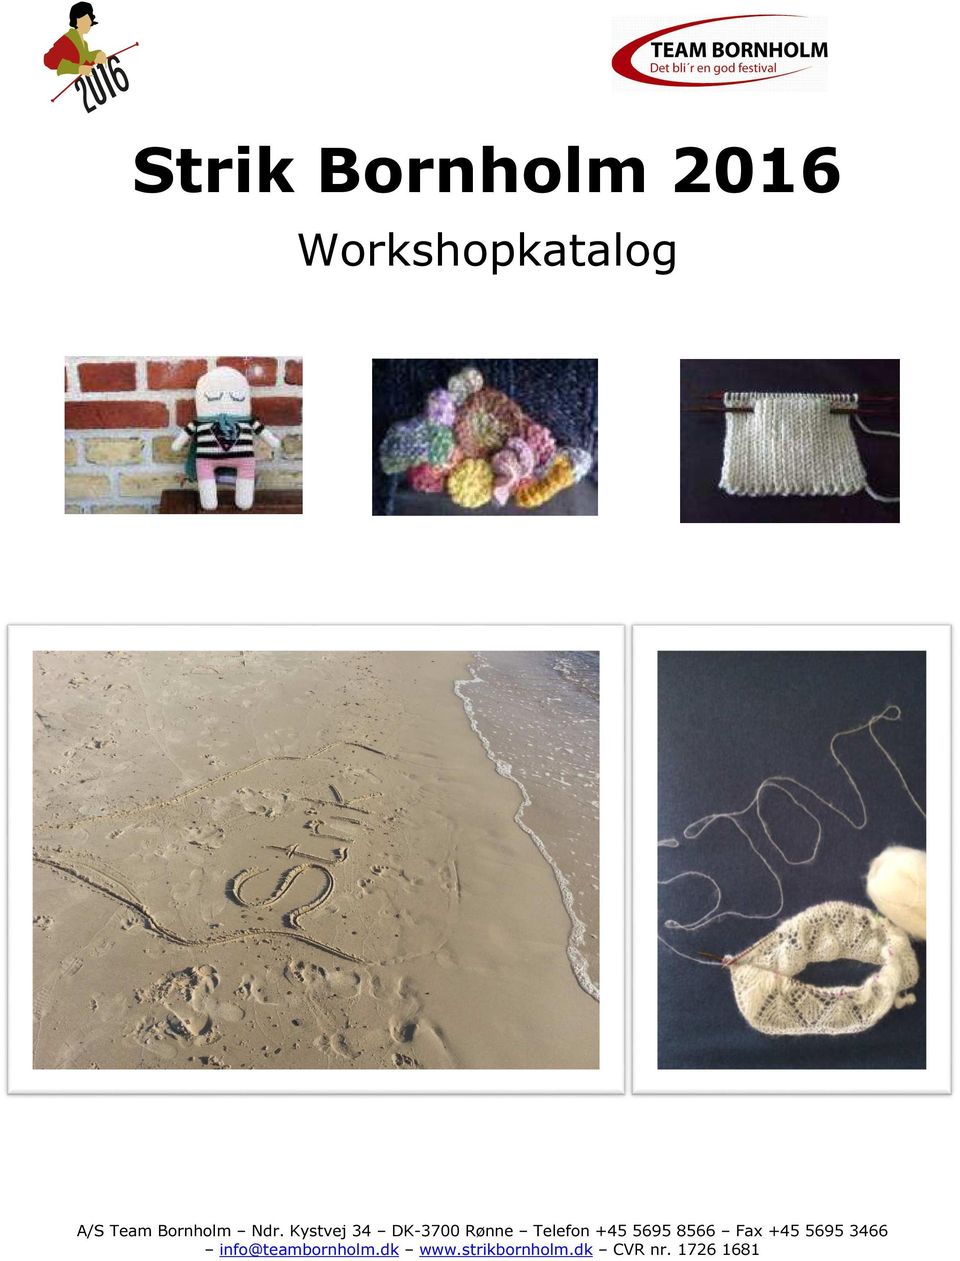 Bornholm Workshopkatalog - Free Download